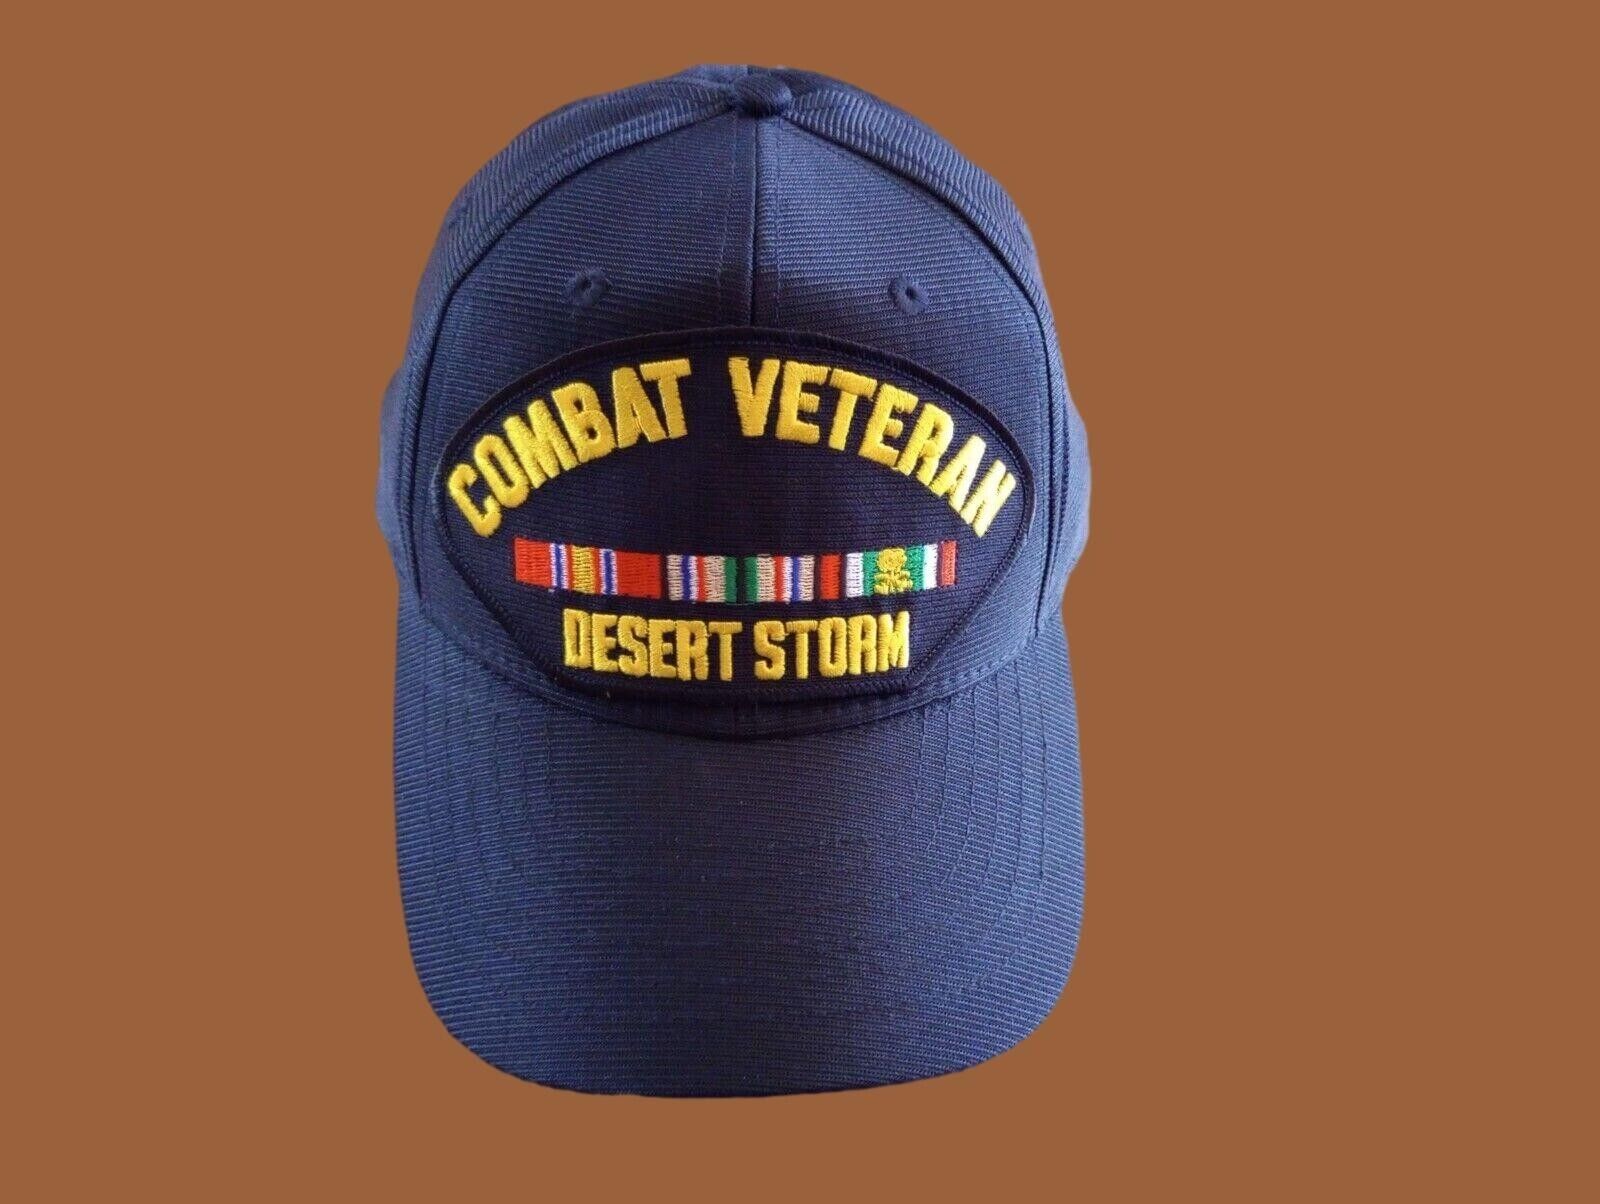 DESERT STORM COMBAT VETERAN HAT OFFICIAL U.S MILITARY BALL CAP U.S.A MADE